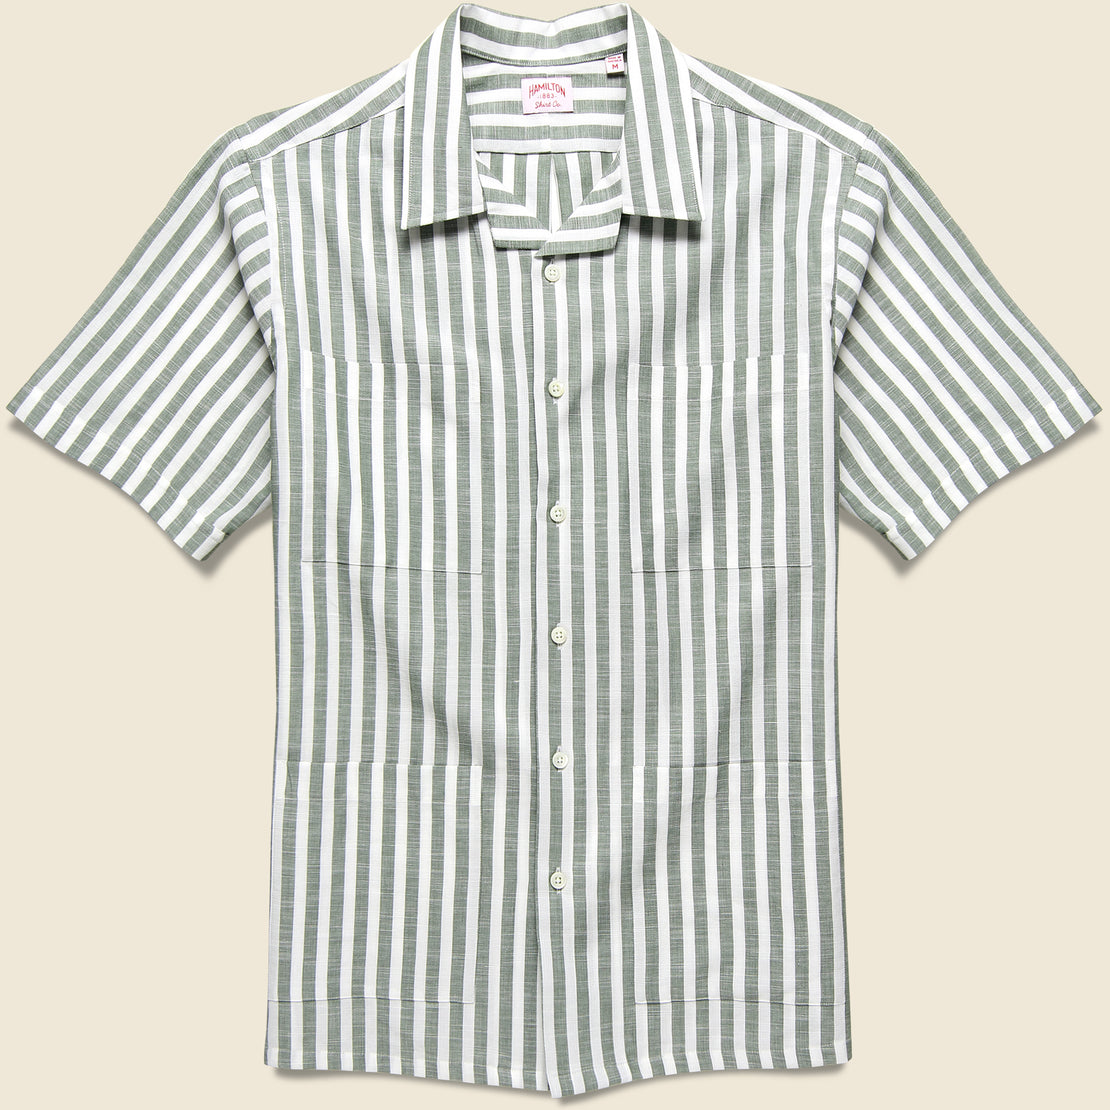 Hamilton Shirt Co. Bengal Stripe Guayabera - Green/White